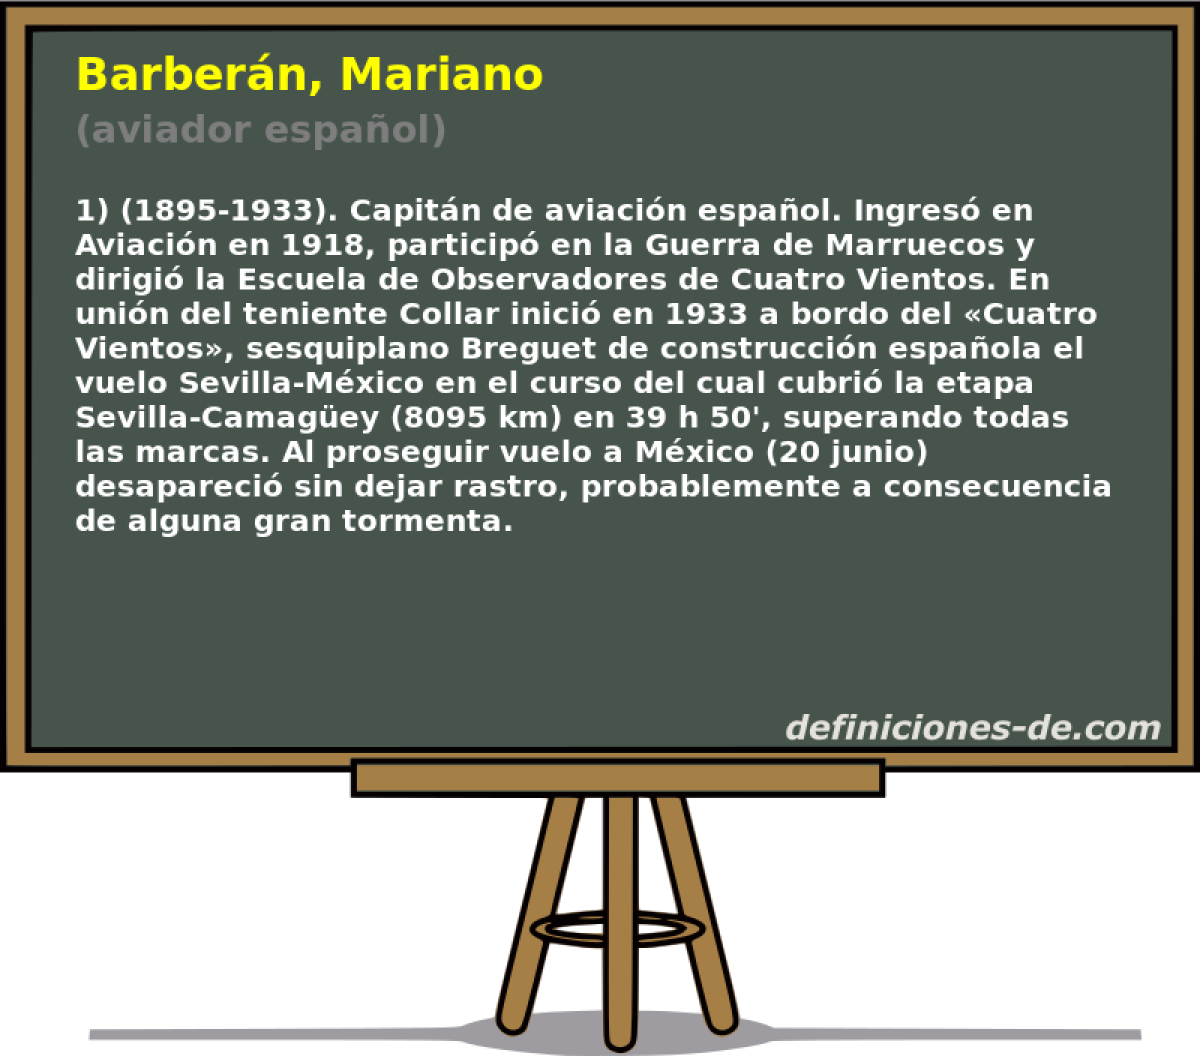 Barbern, Mariano (aviador espaol)